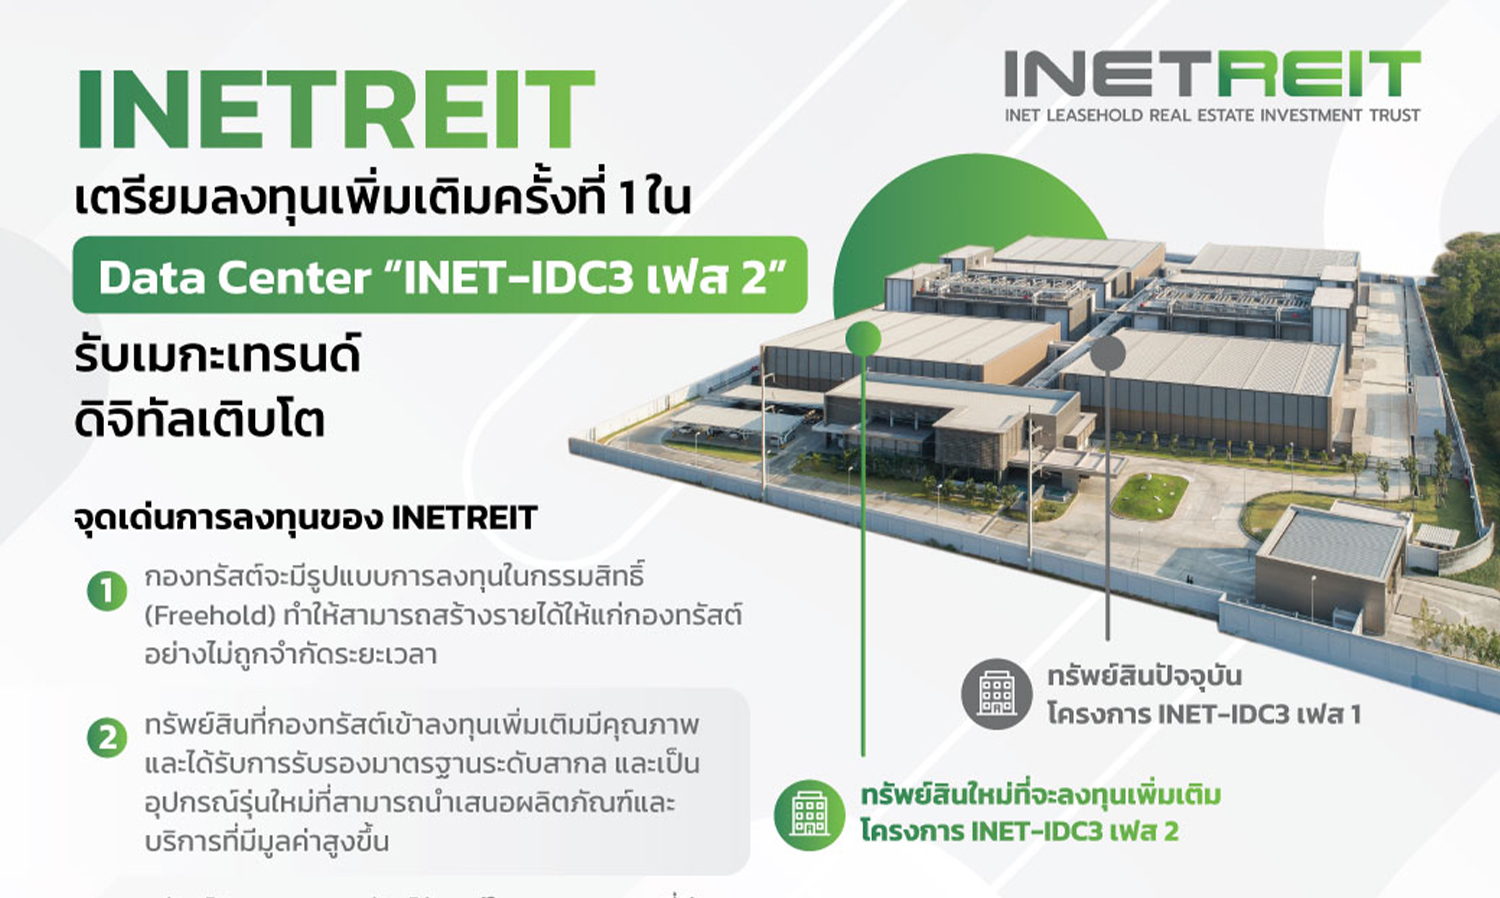 INETREIT เดินหน้าเพิ่มทุนครั้งที่ 1 เพิ่มศักยภาพกองทรัสต์ ชูจุดเด่นลงทุนในกรรมสิทธิ์โครงการ INET-IDC3 เฟส 2 รับแนวโน้มดีมานด์คลาวด์เติบโตต่อเนื่อง